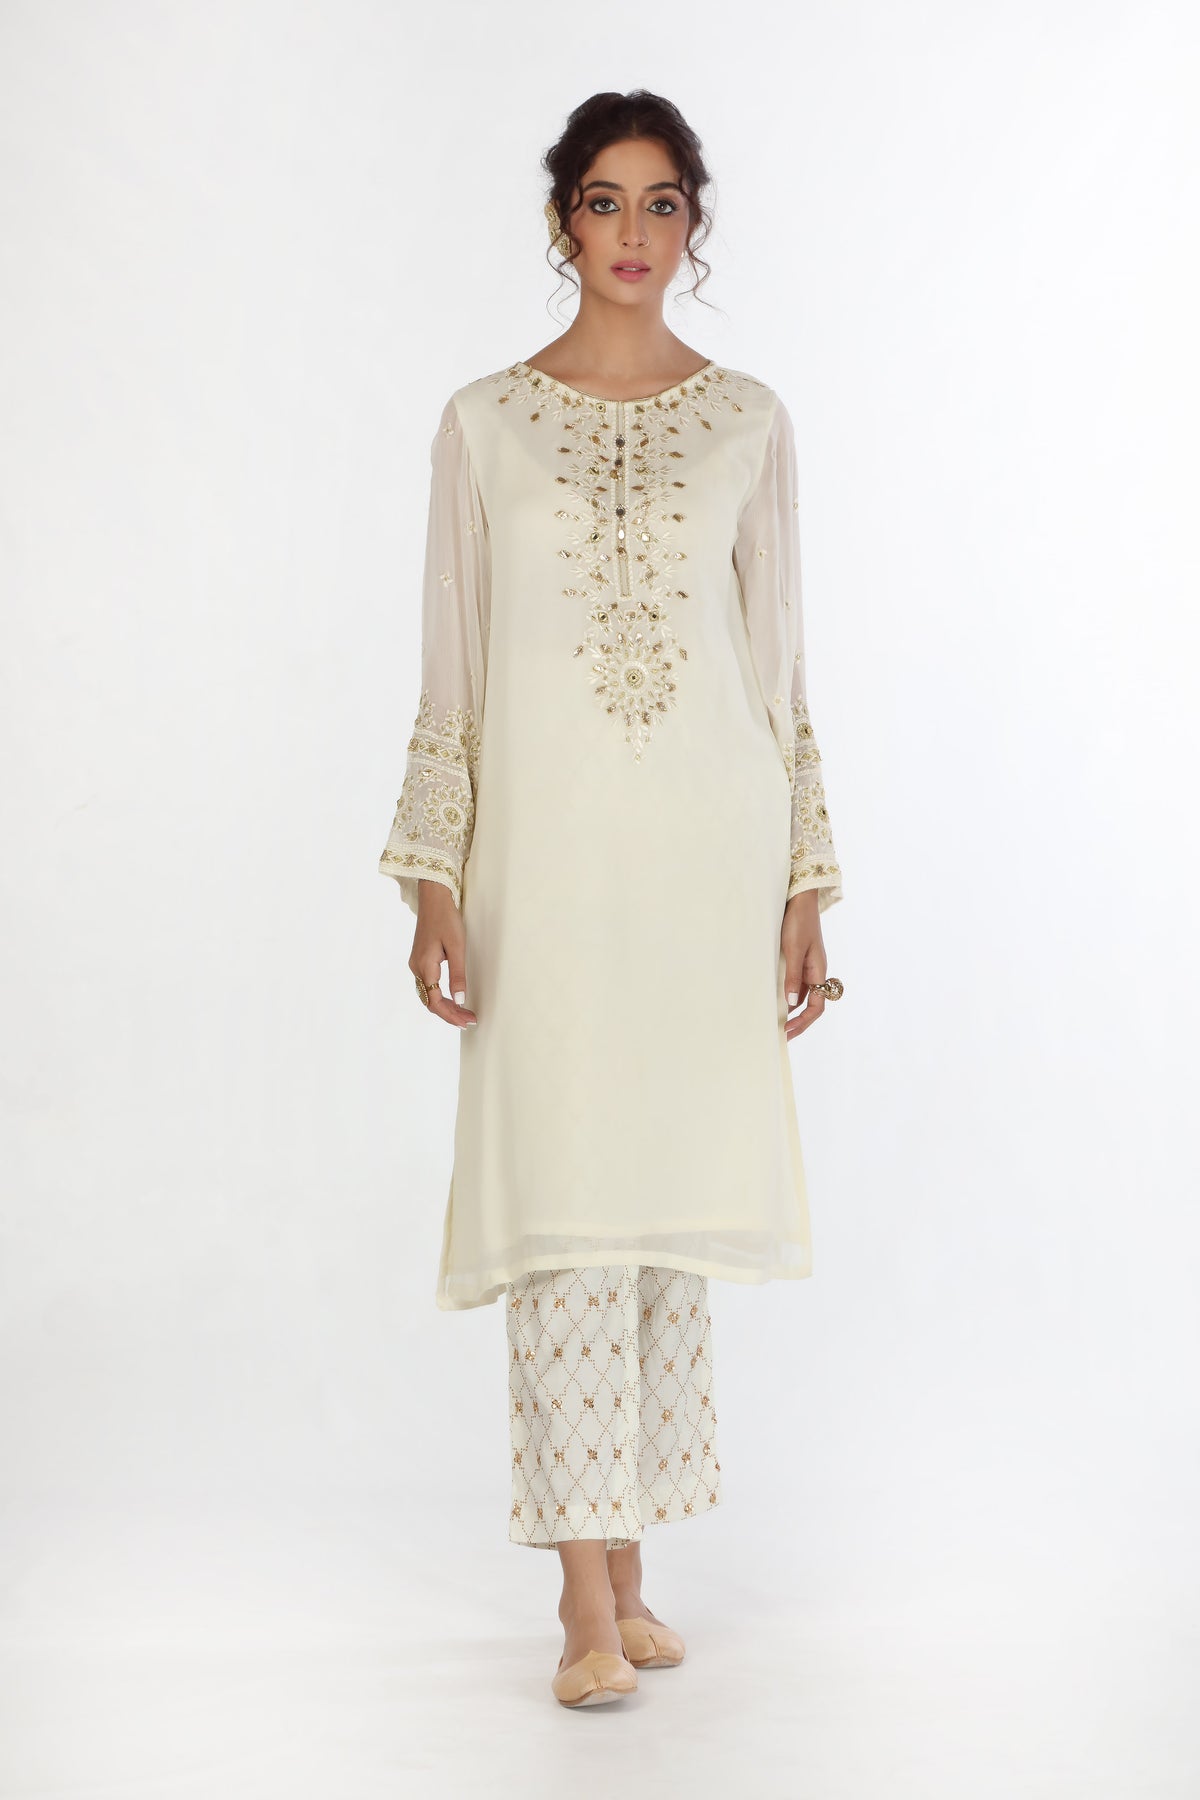 Self Gold in Off White coloured Pak Chiffon fabric